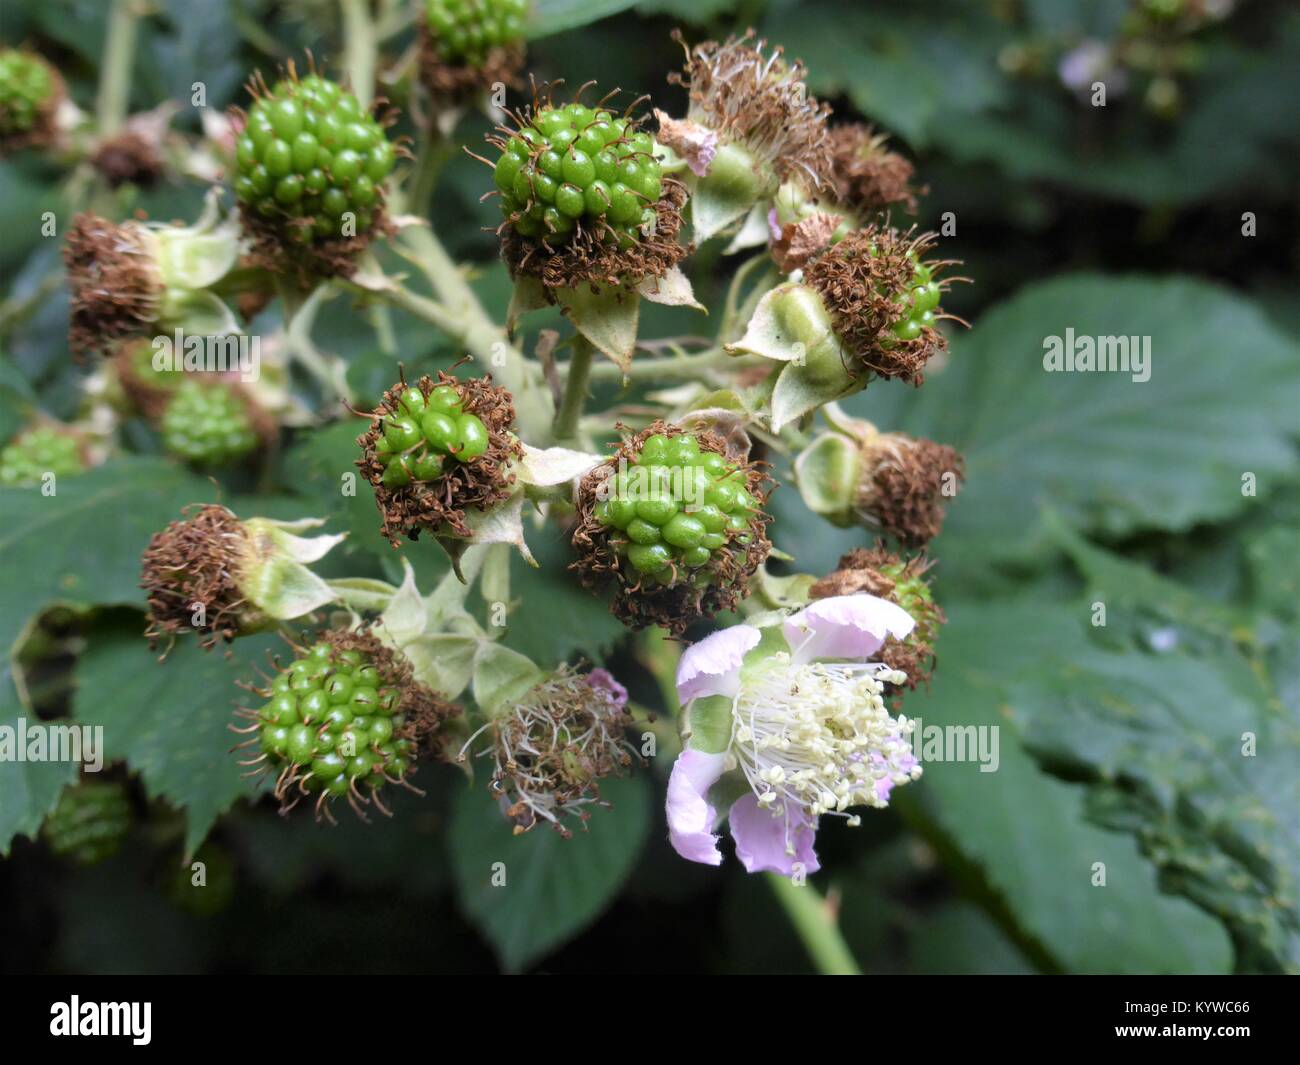 Flowering blackberry plant Stock Photo